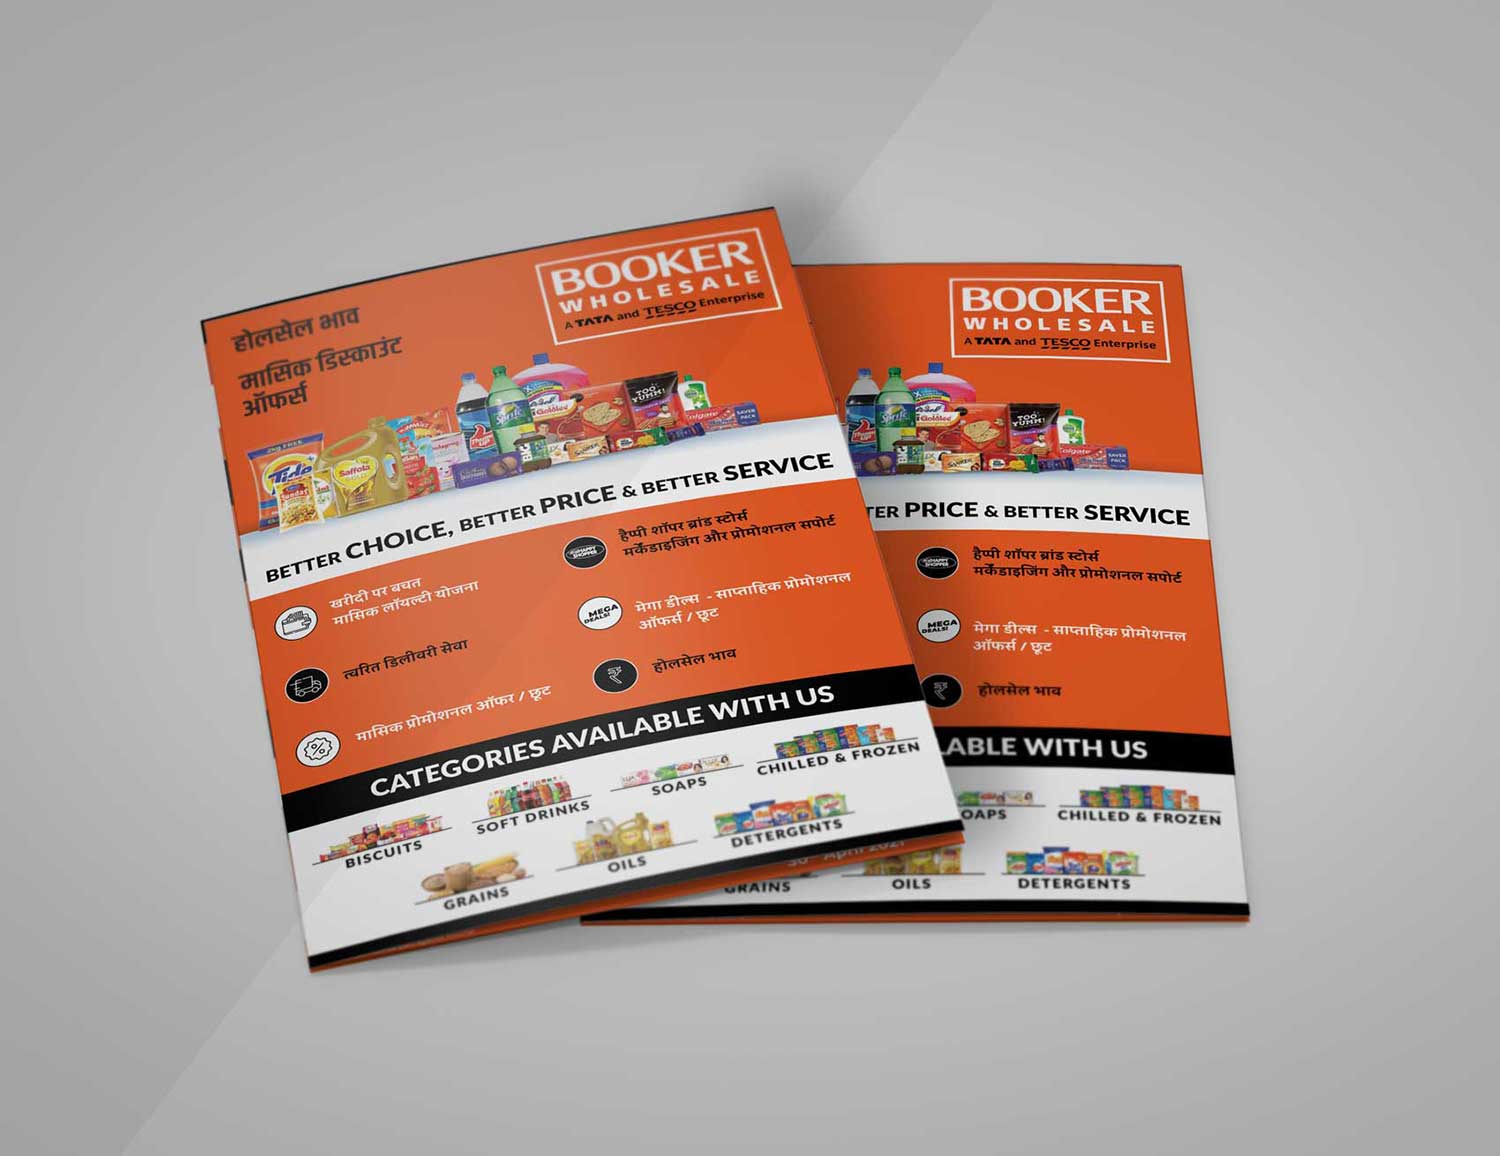 Booker Wholesale branding by StudioD